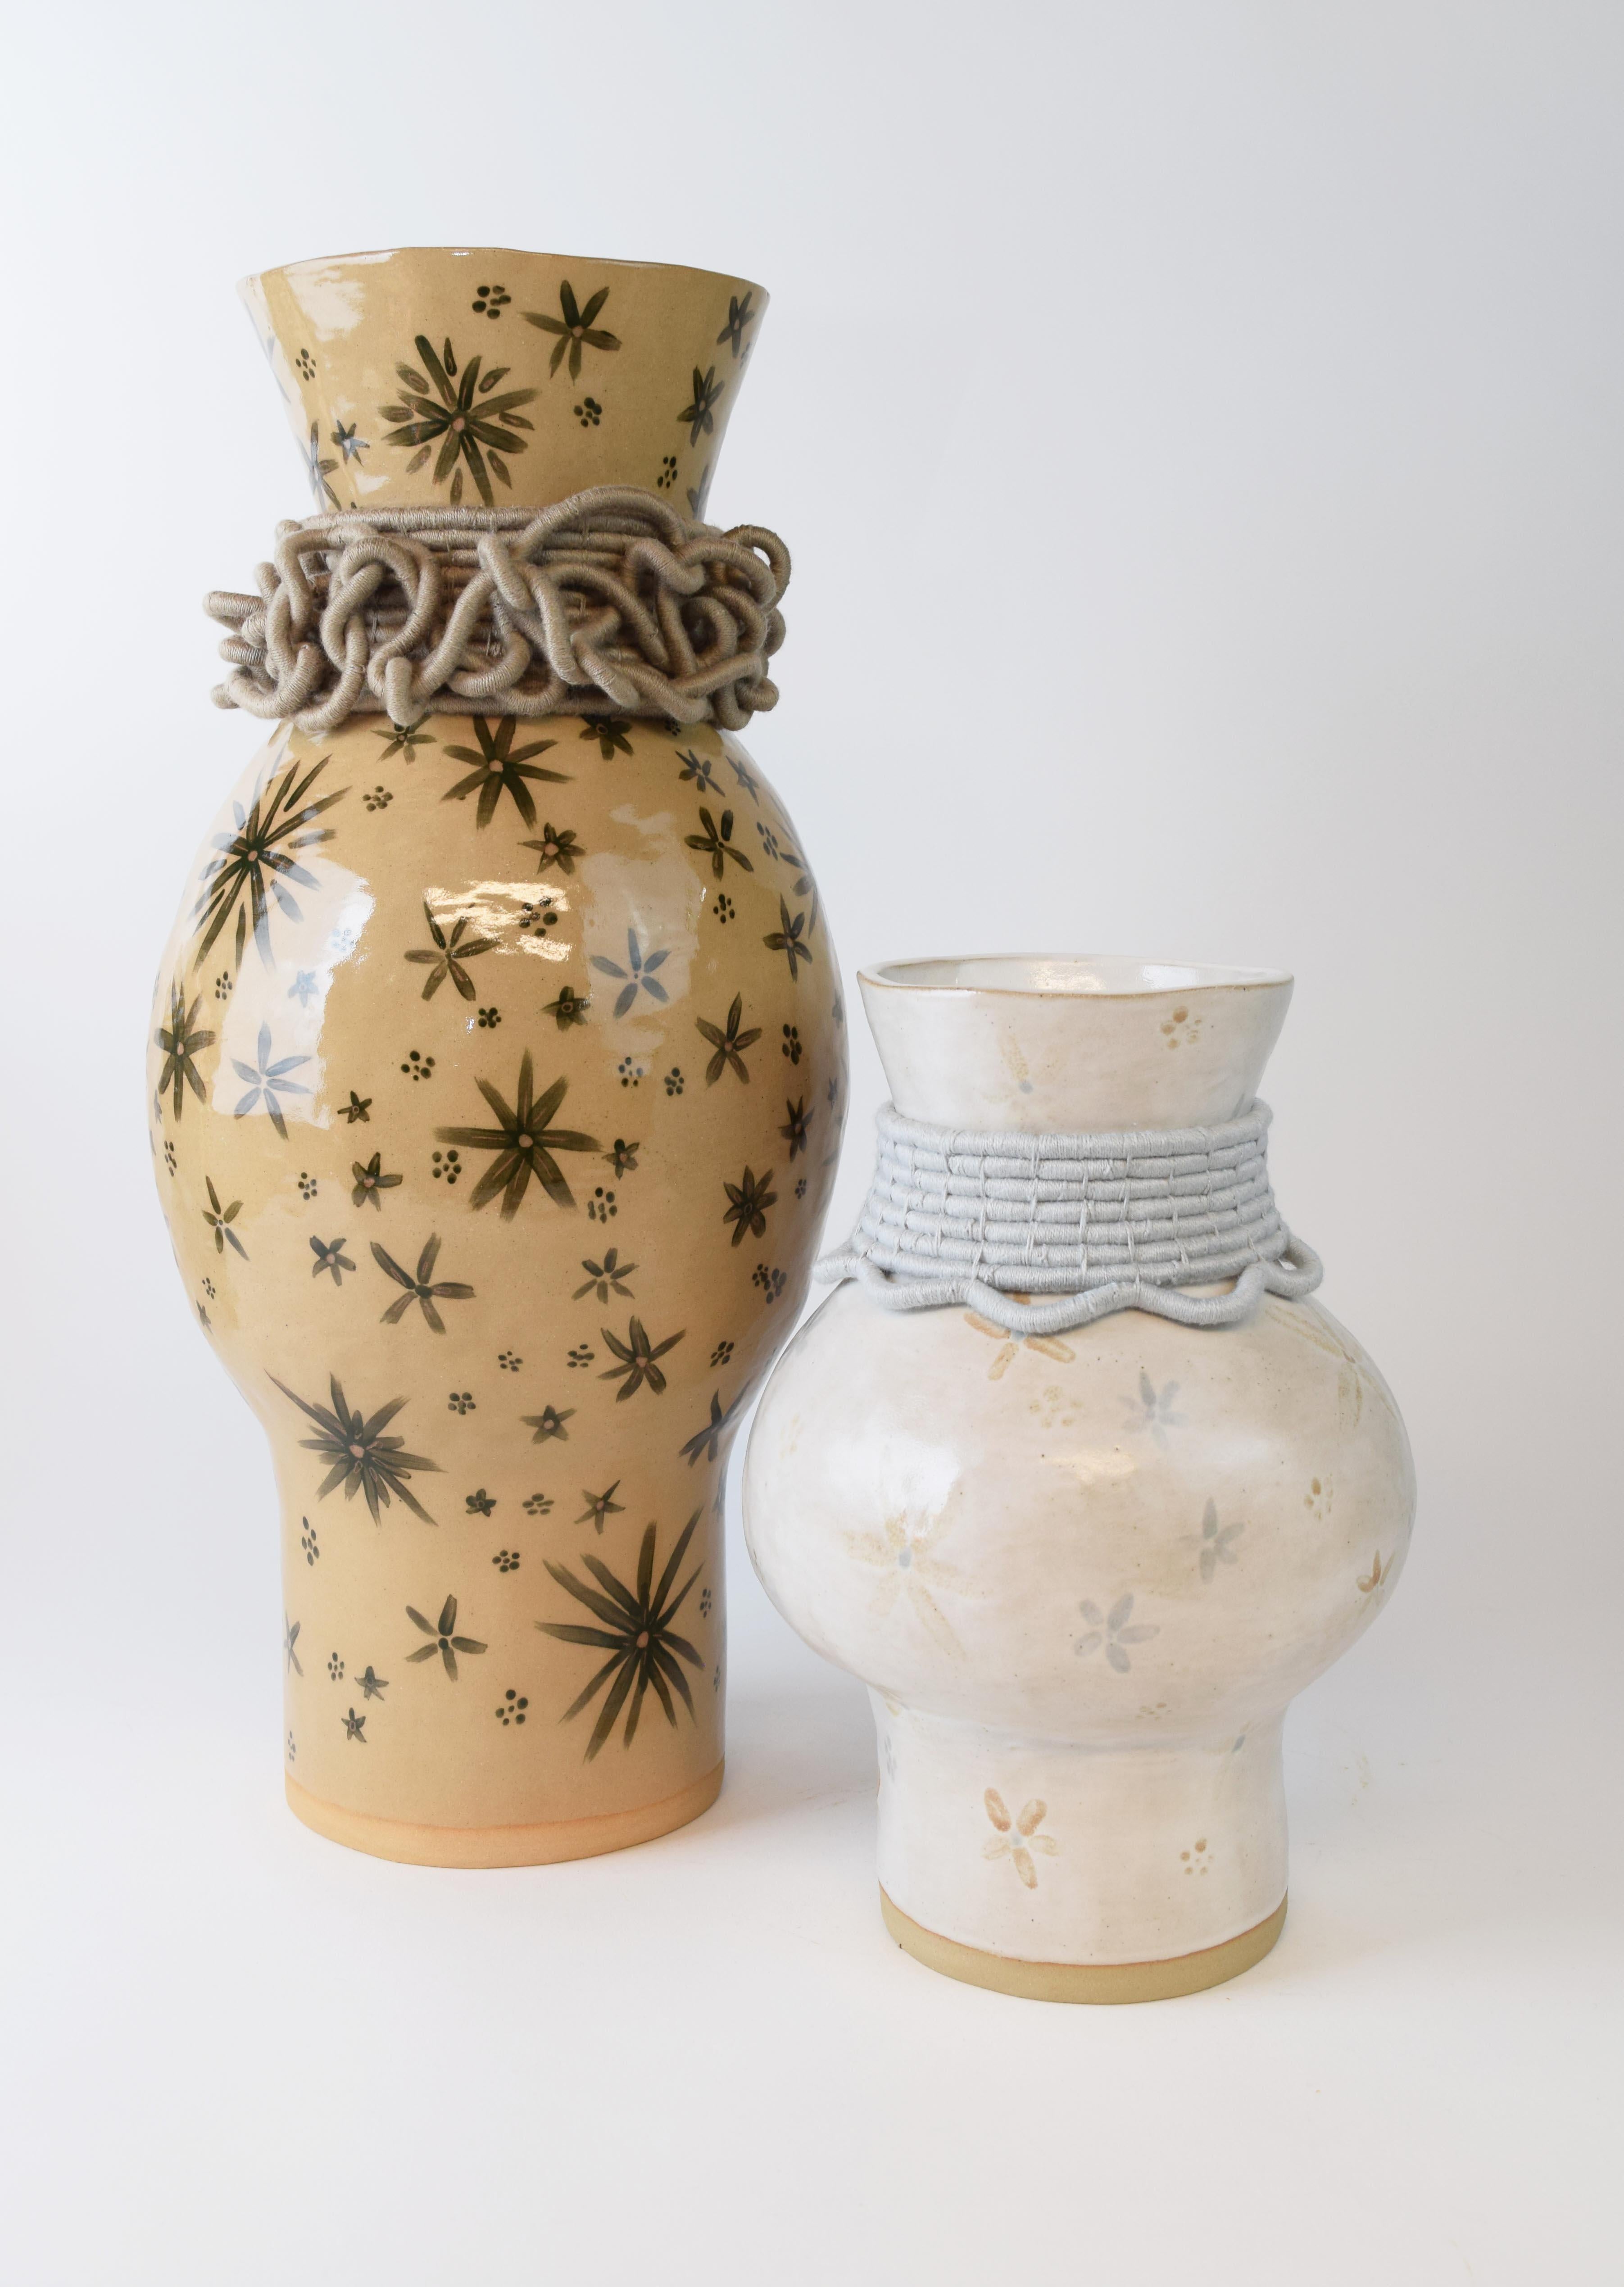 OOAK Handmade Ceramic Vase #791 - Hand Glazed Floral & Light Blue Cotton Detail In New Condition For Sale In Proctorsville, VT